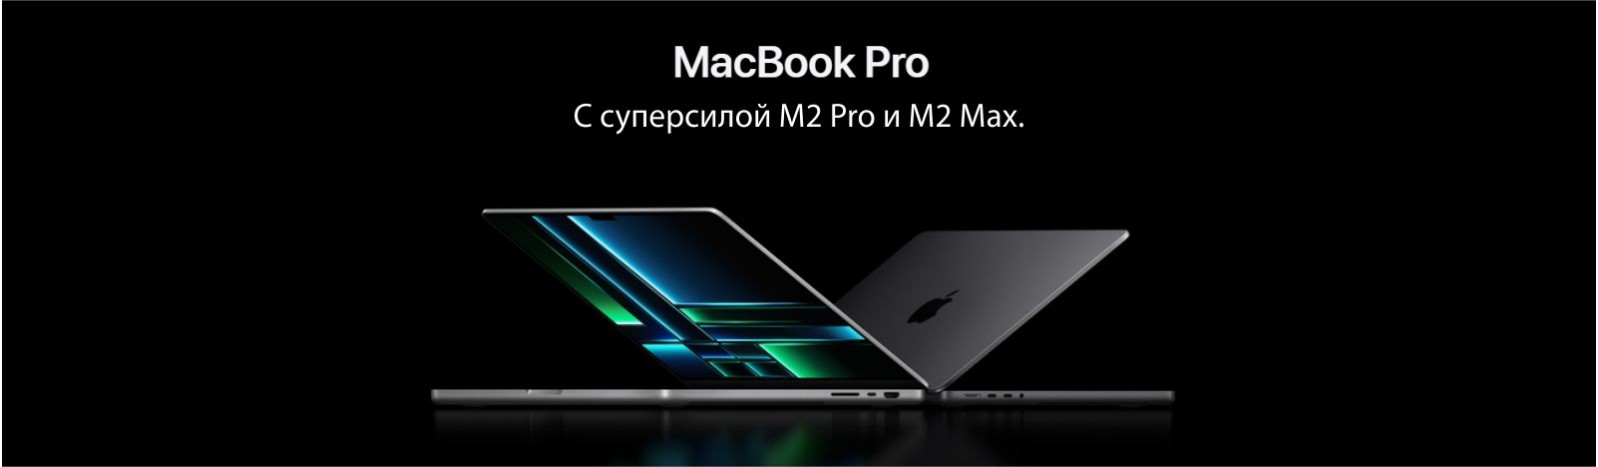 *MacBook Pro NEW